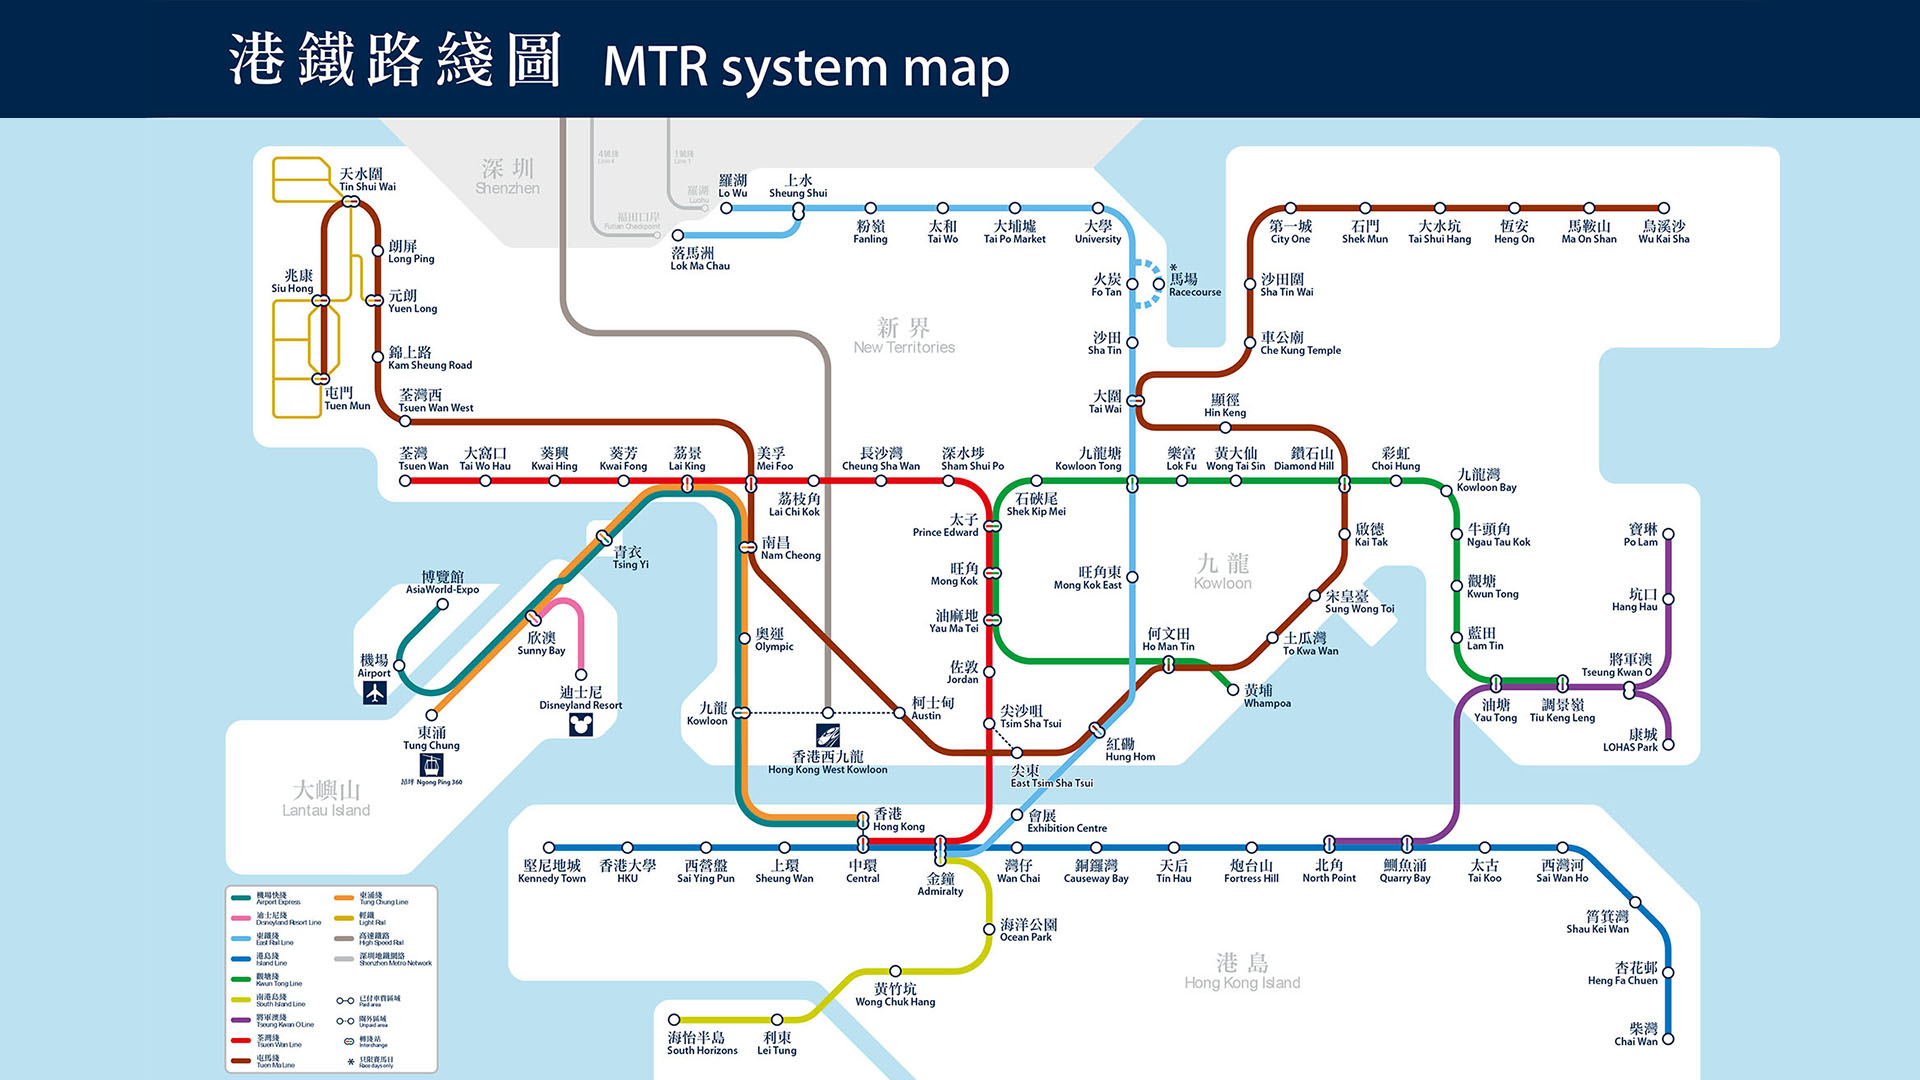 MTR – Hong Kong’s railway system